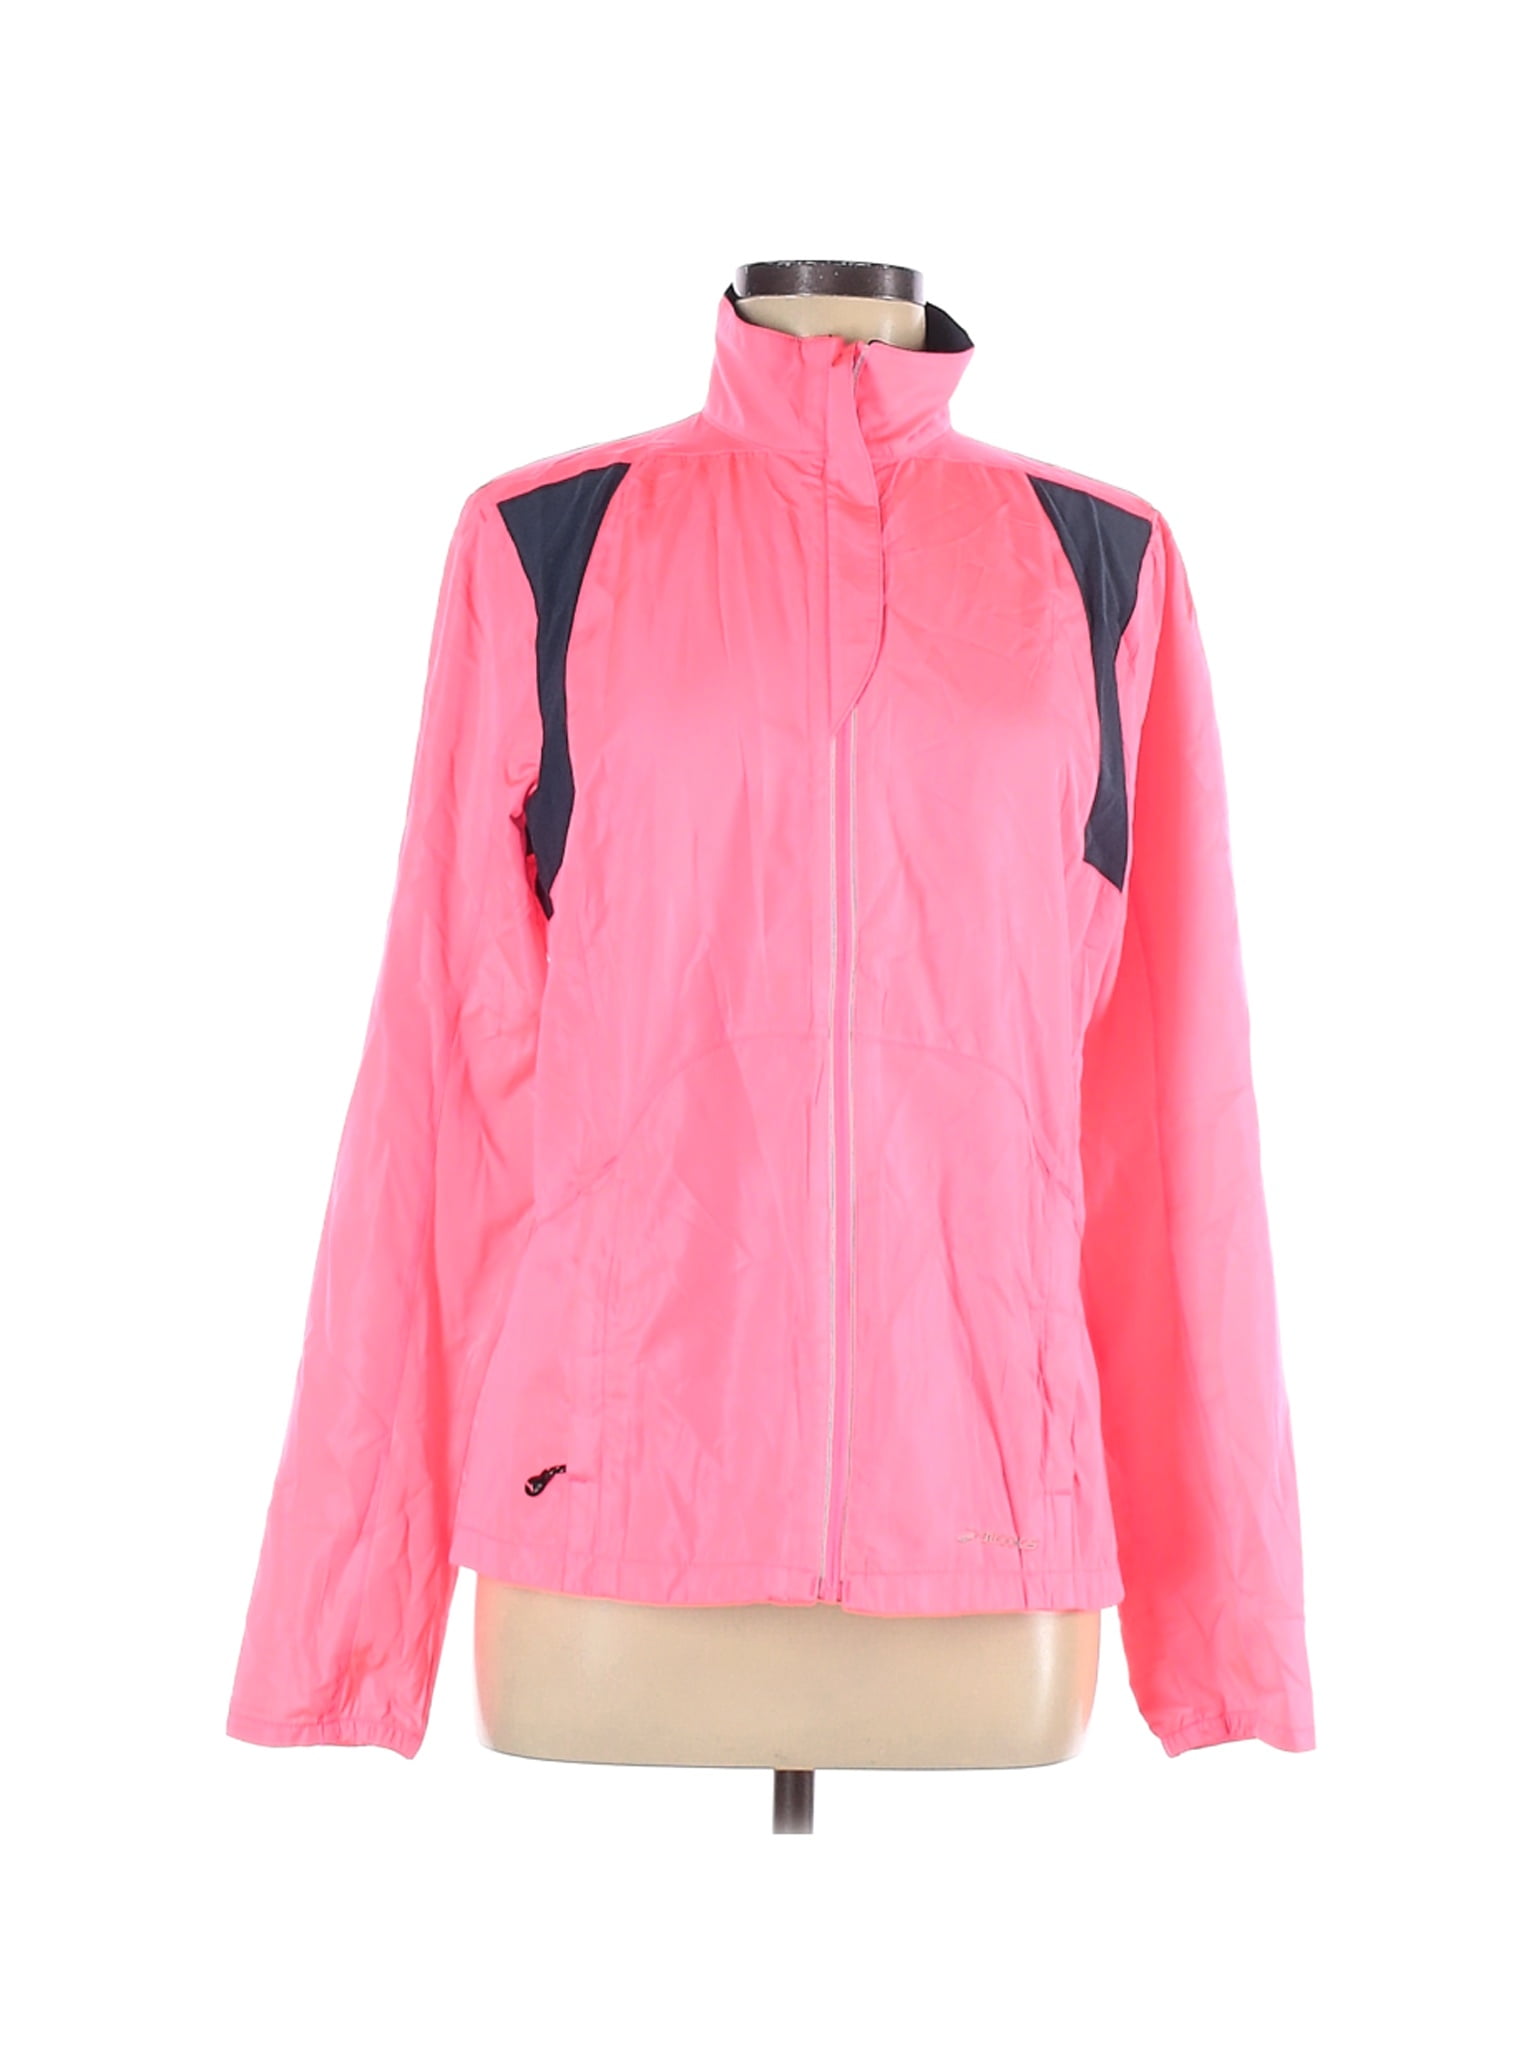 brooks jackets womens pink